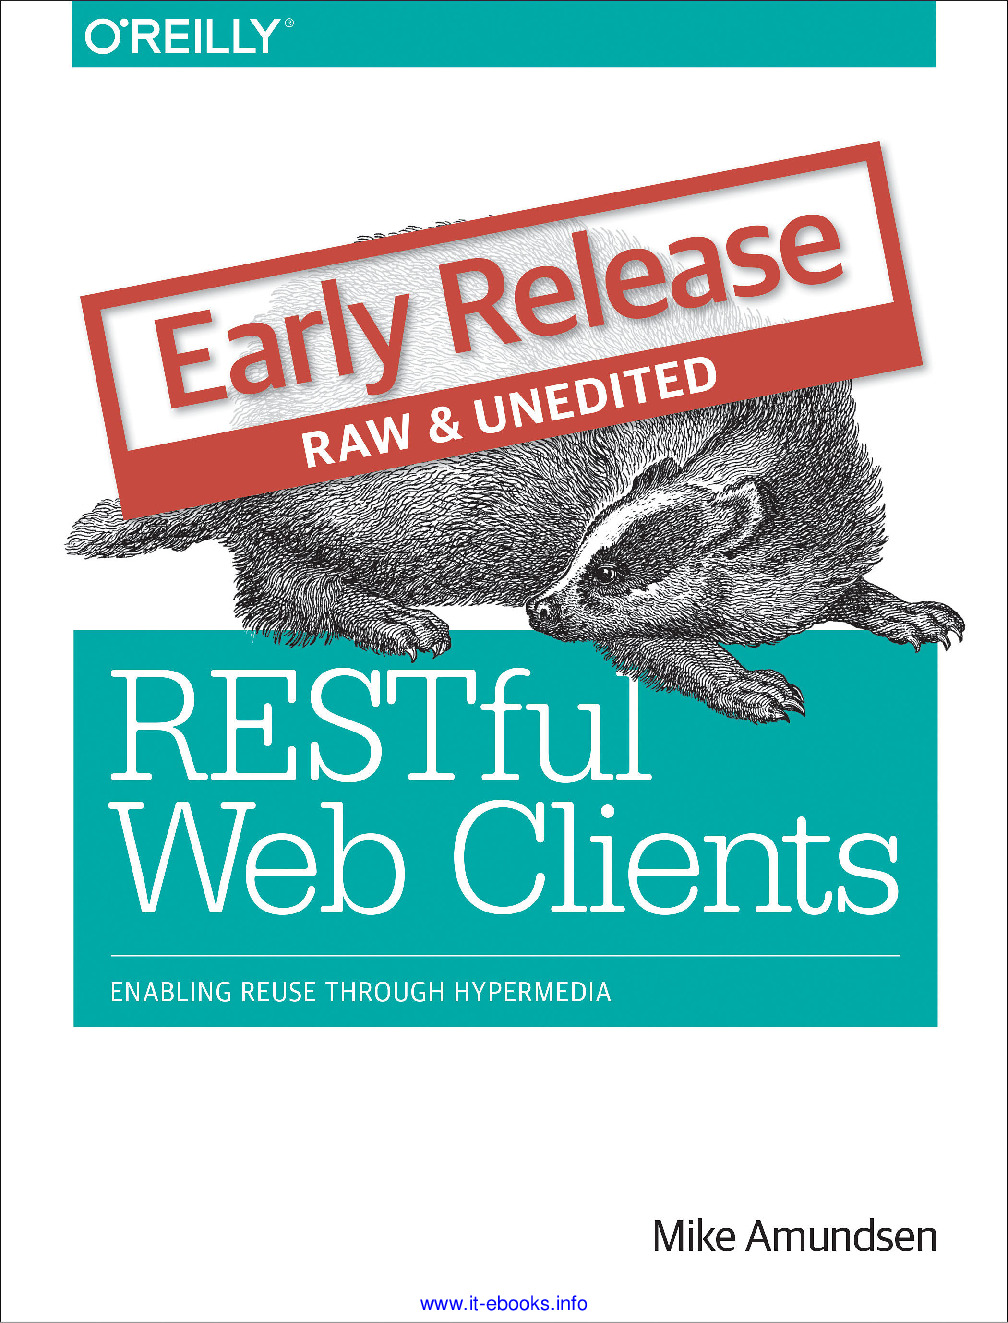 RESTful Web Clients – Enabling Reuse Through Hypermedia